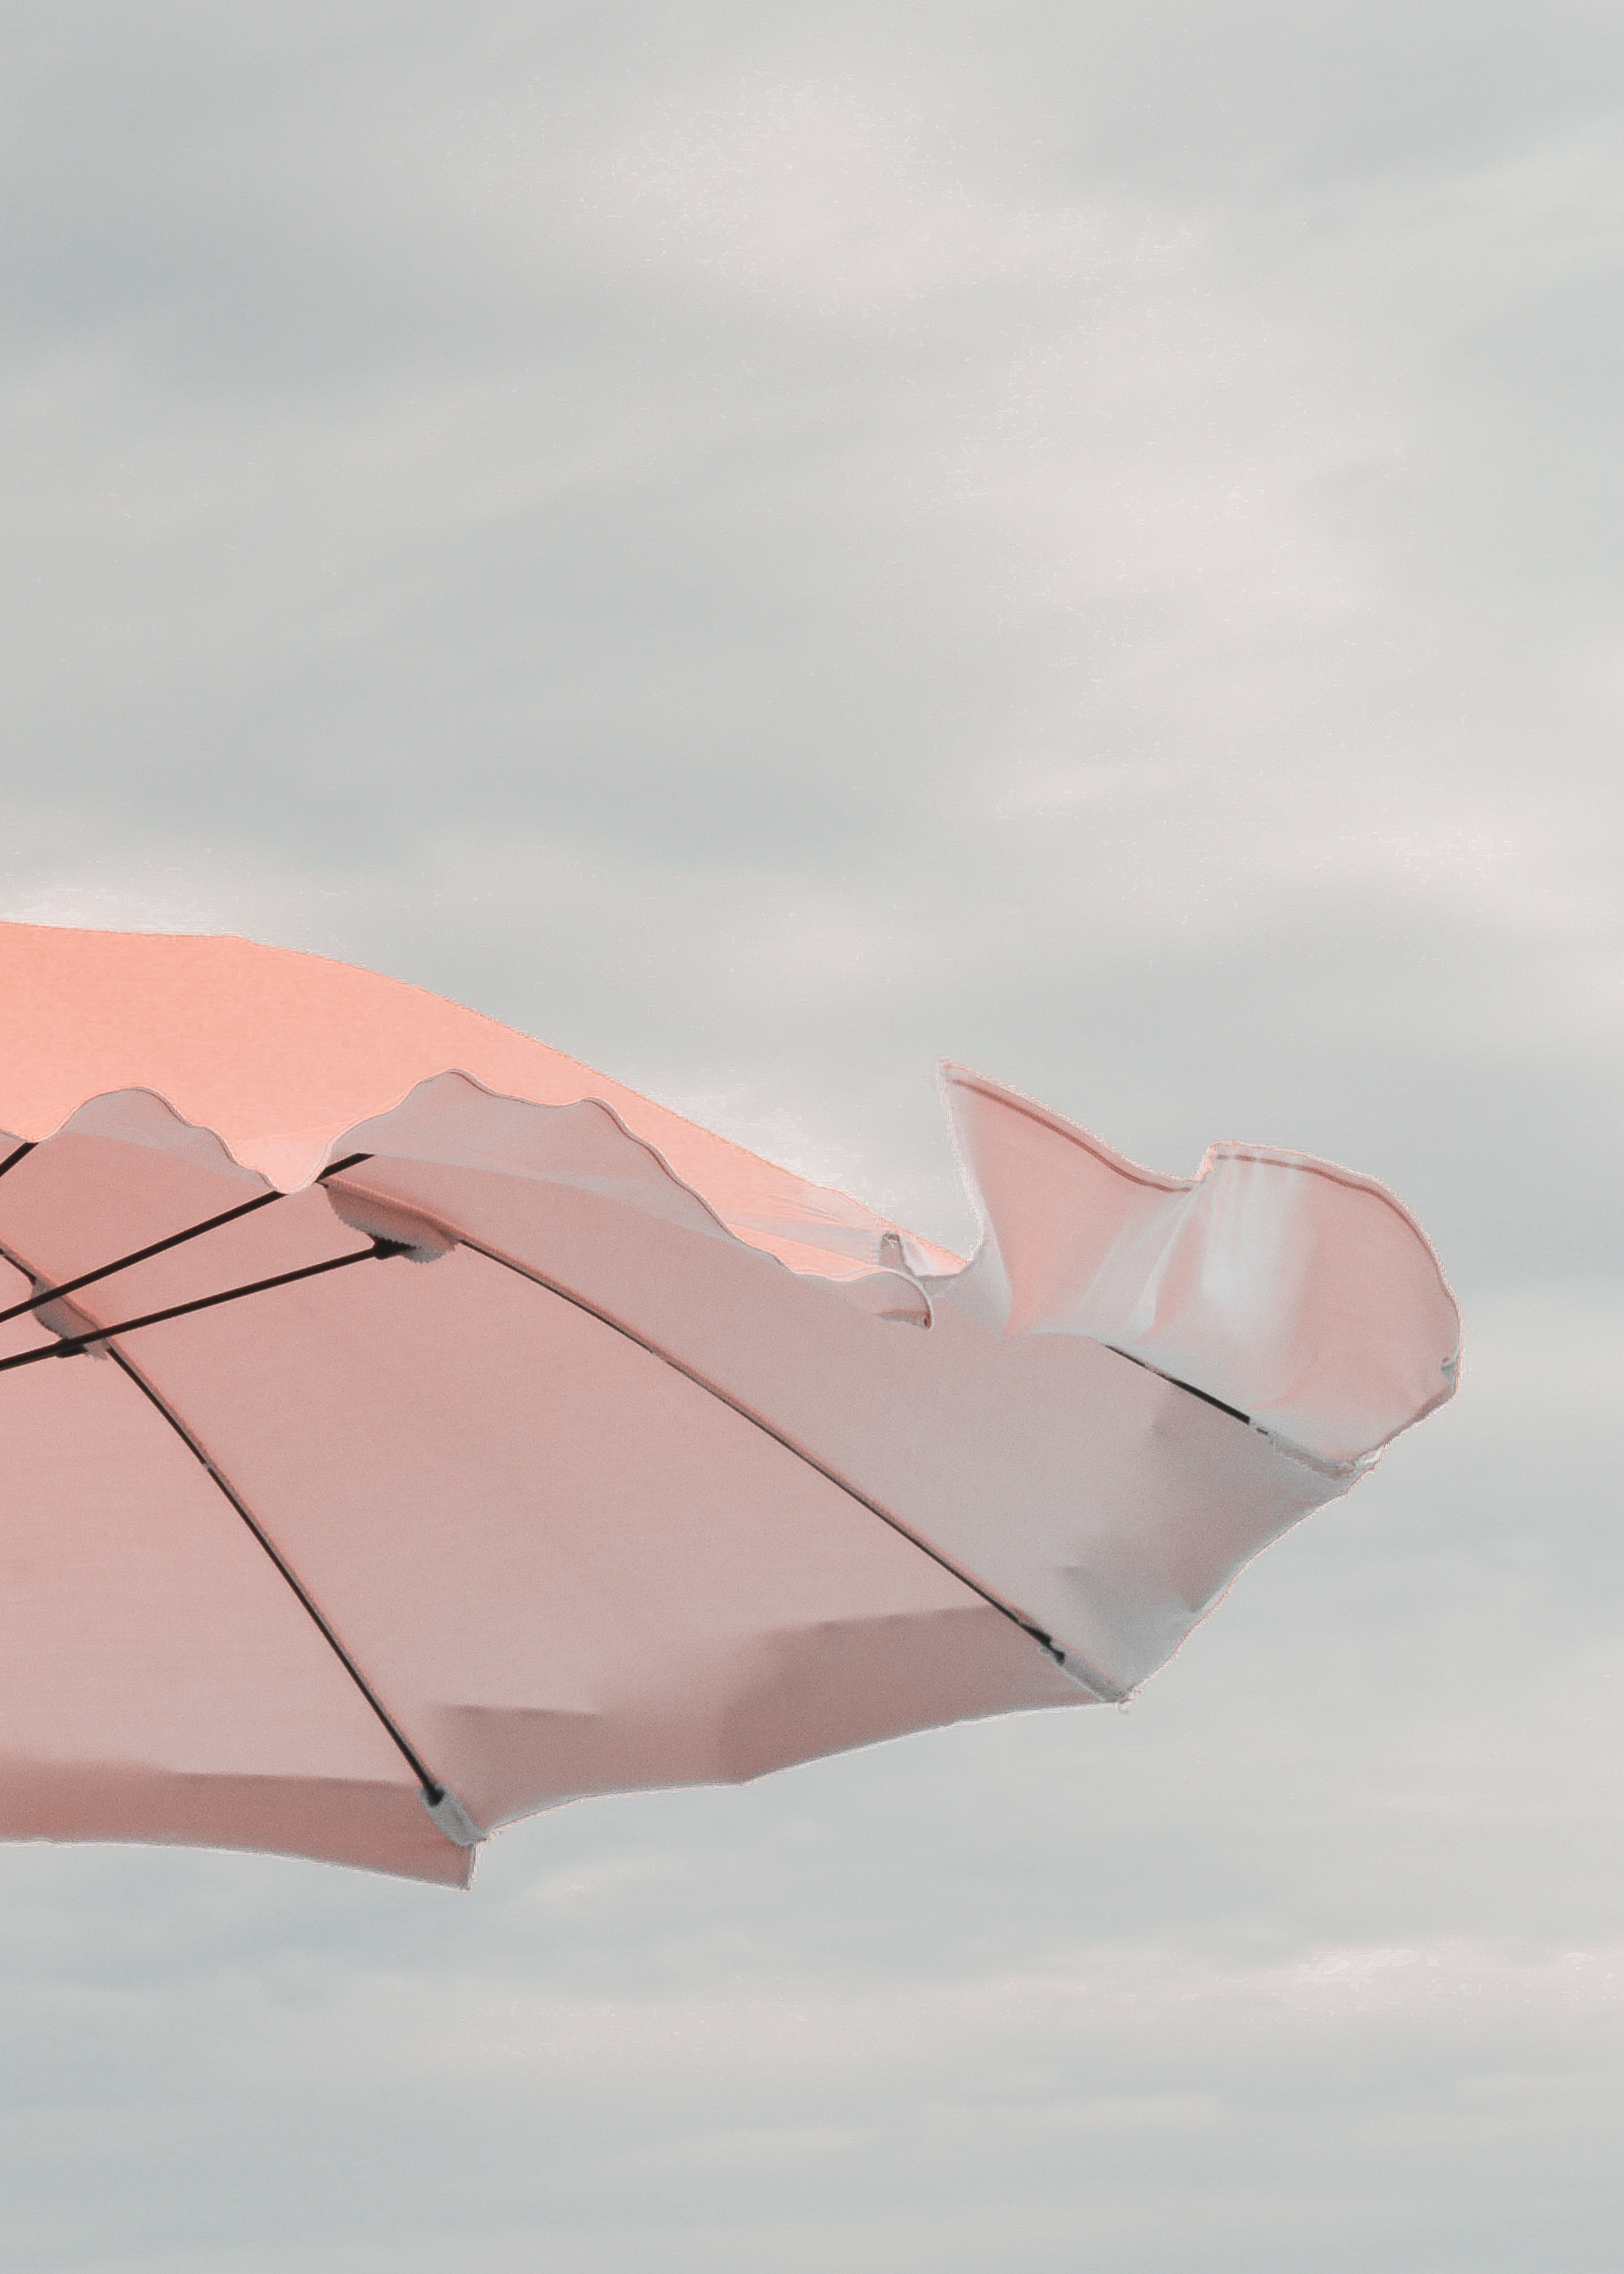 pink umbrella with blue sky